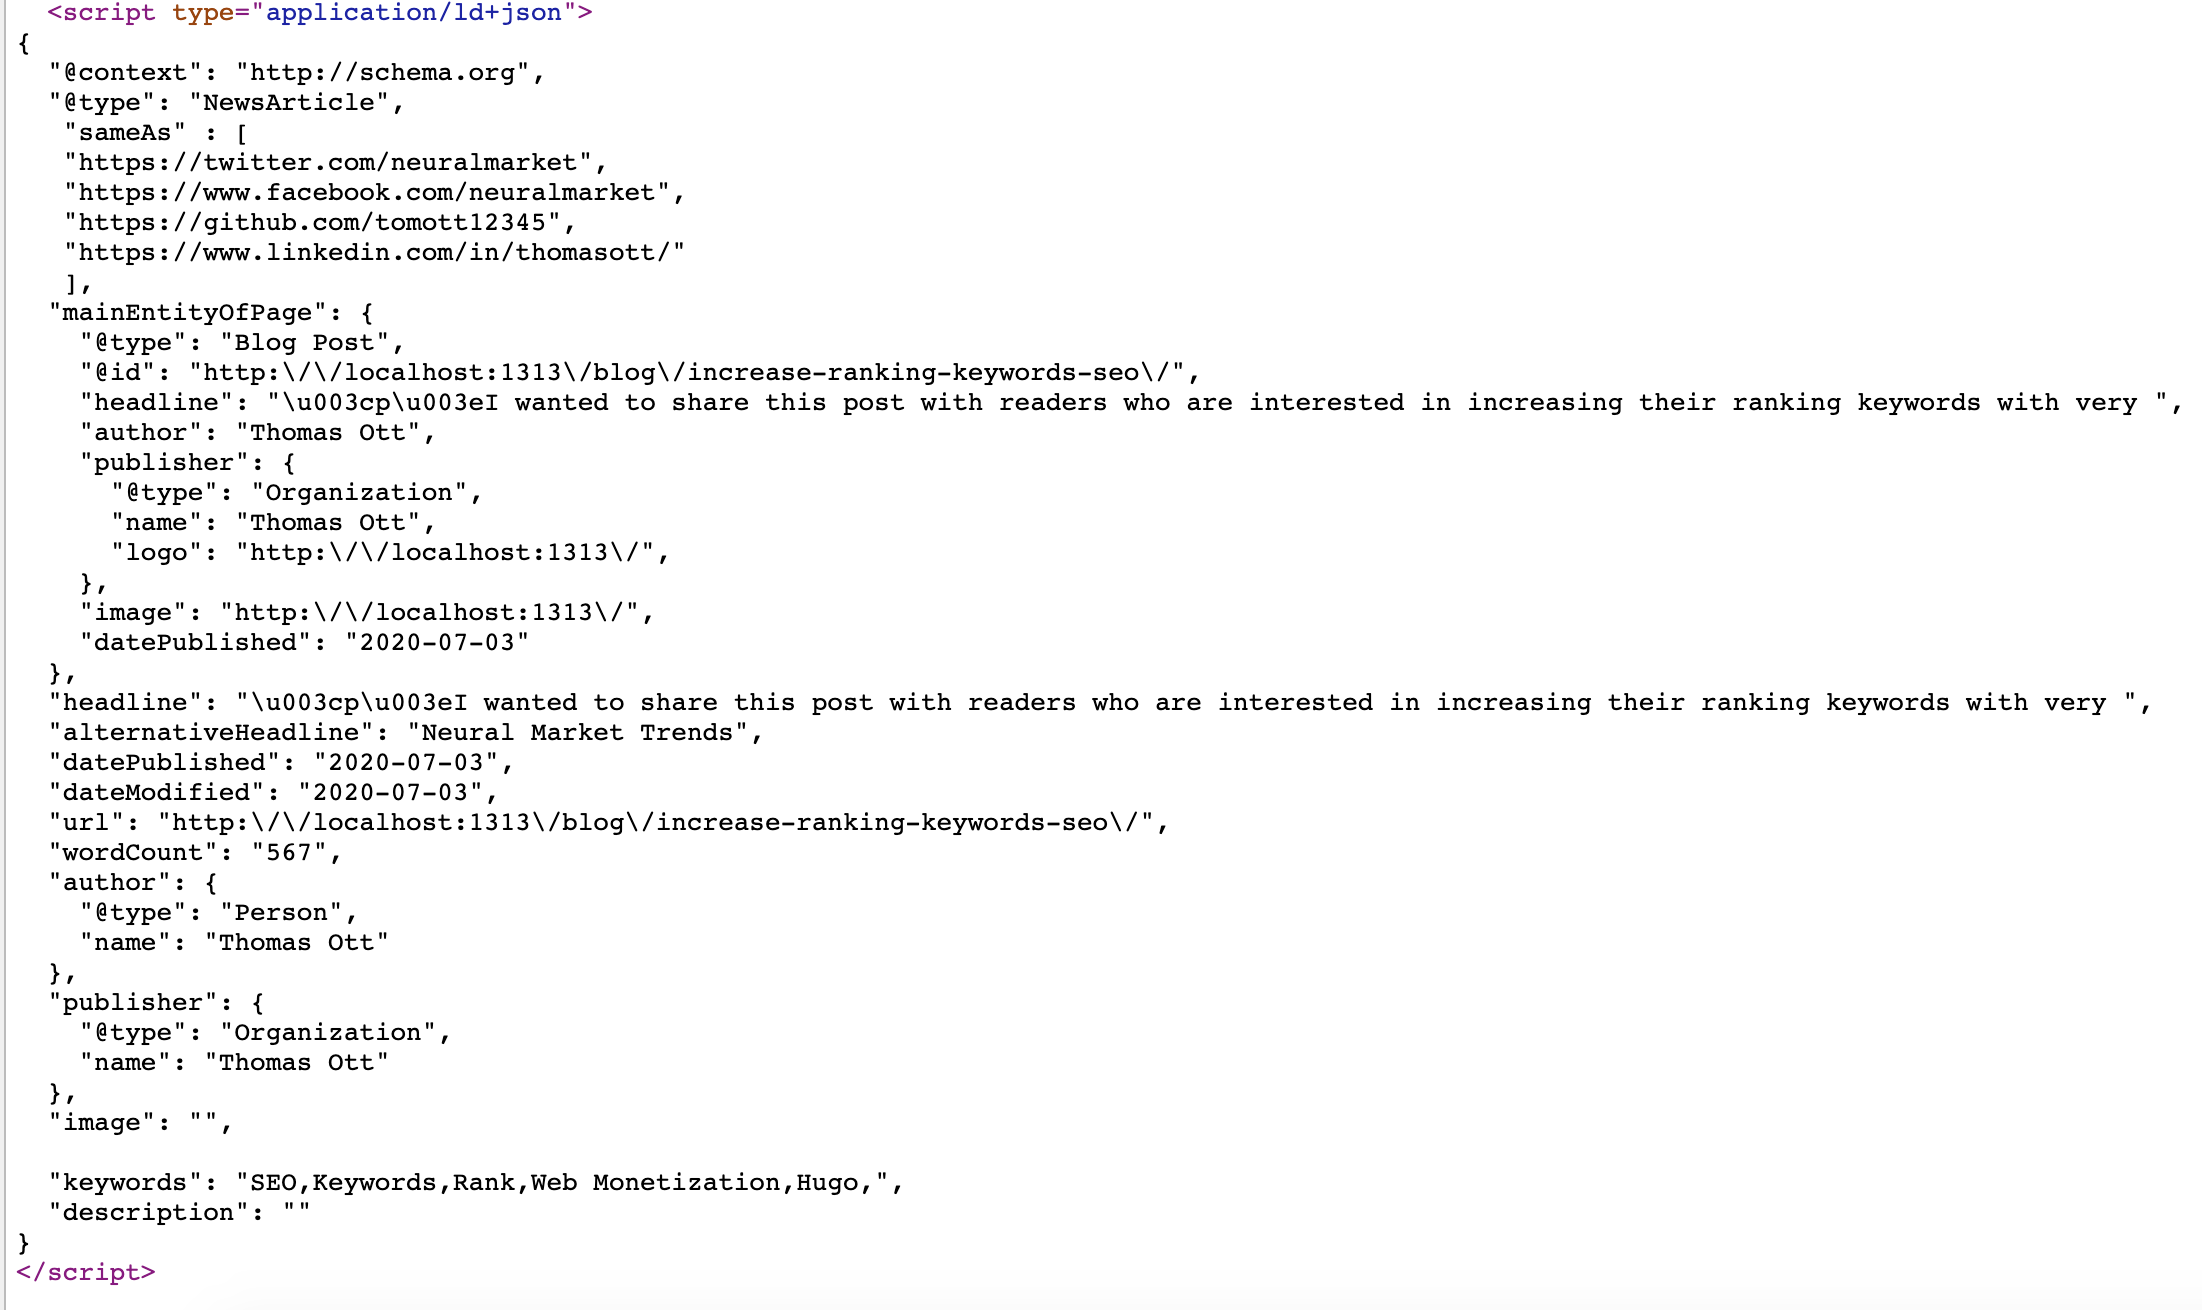 JSON LD shot of my HTML code